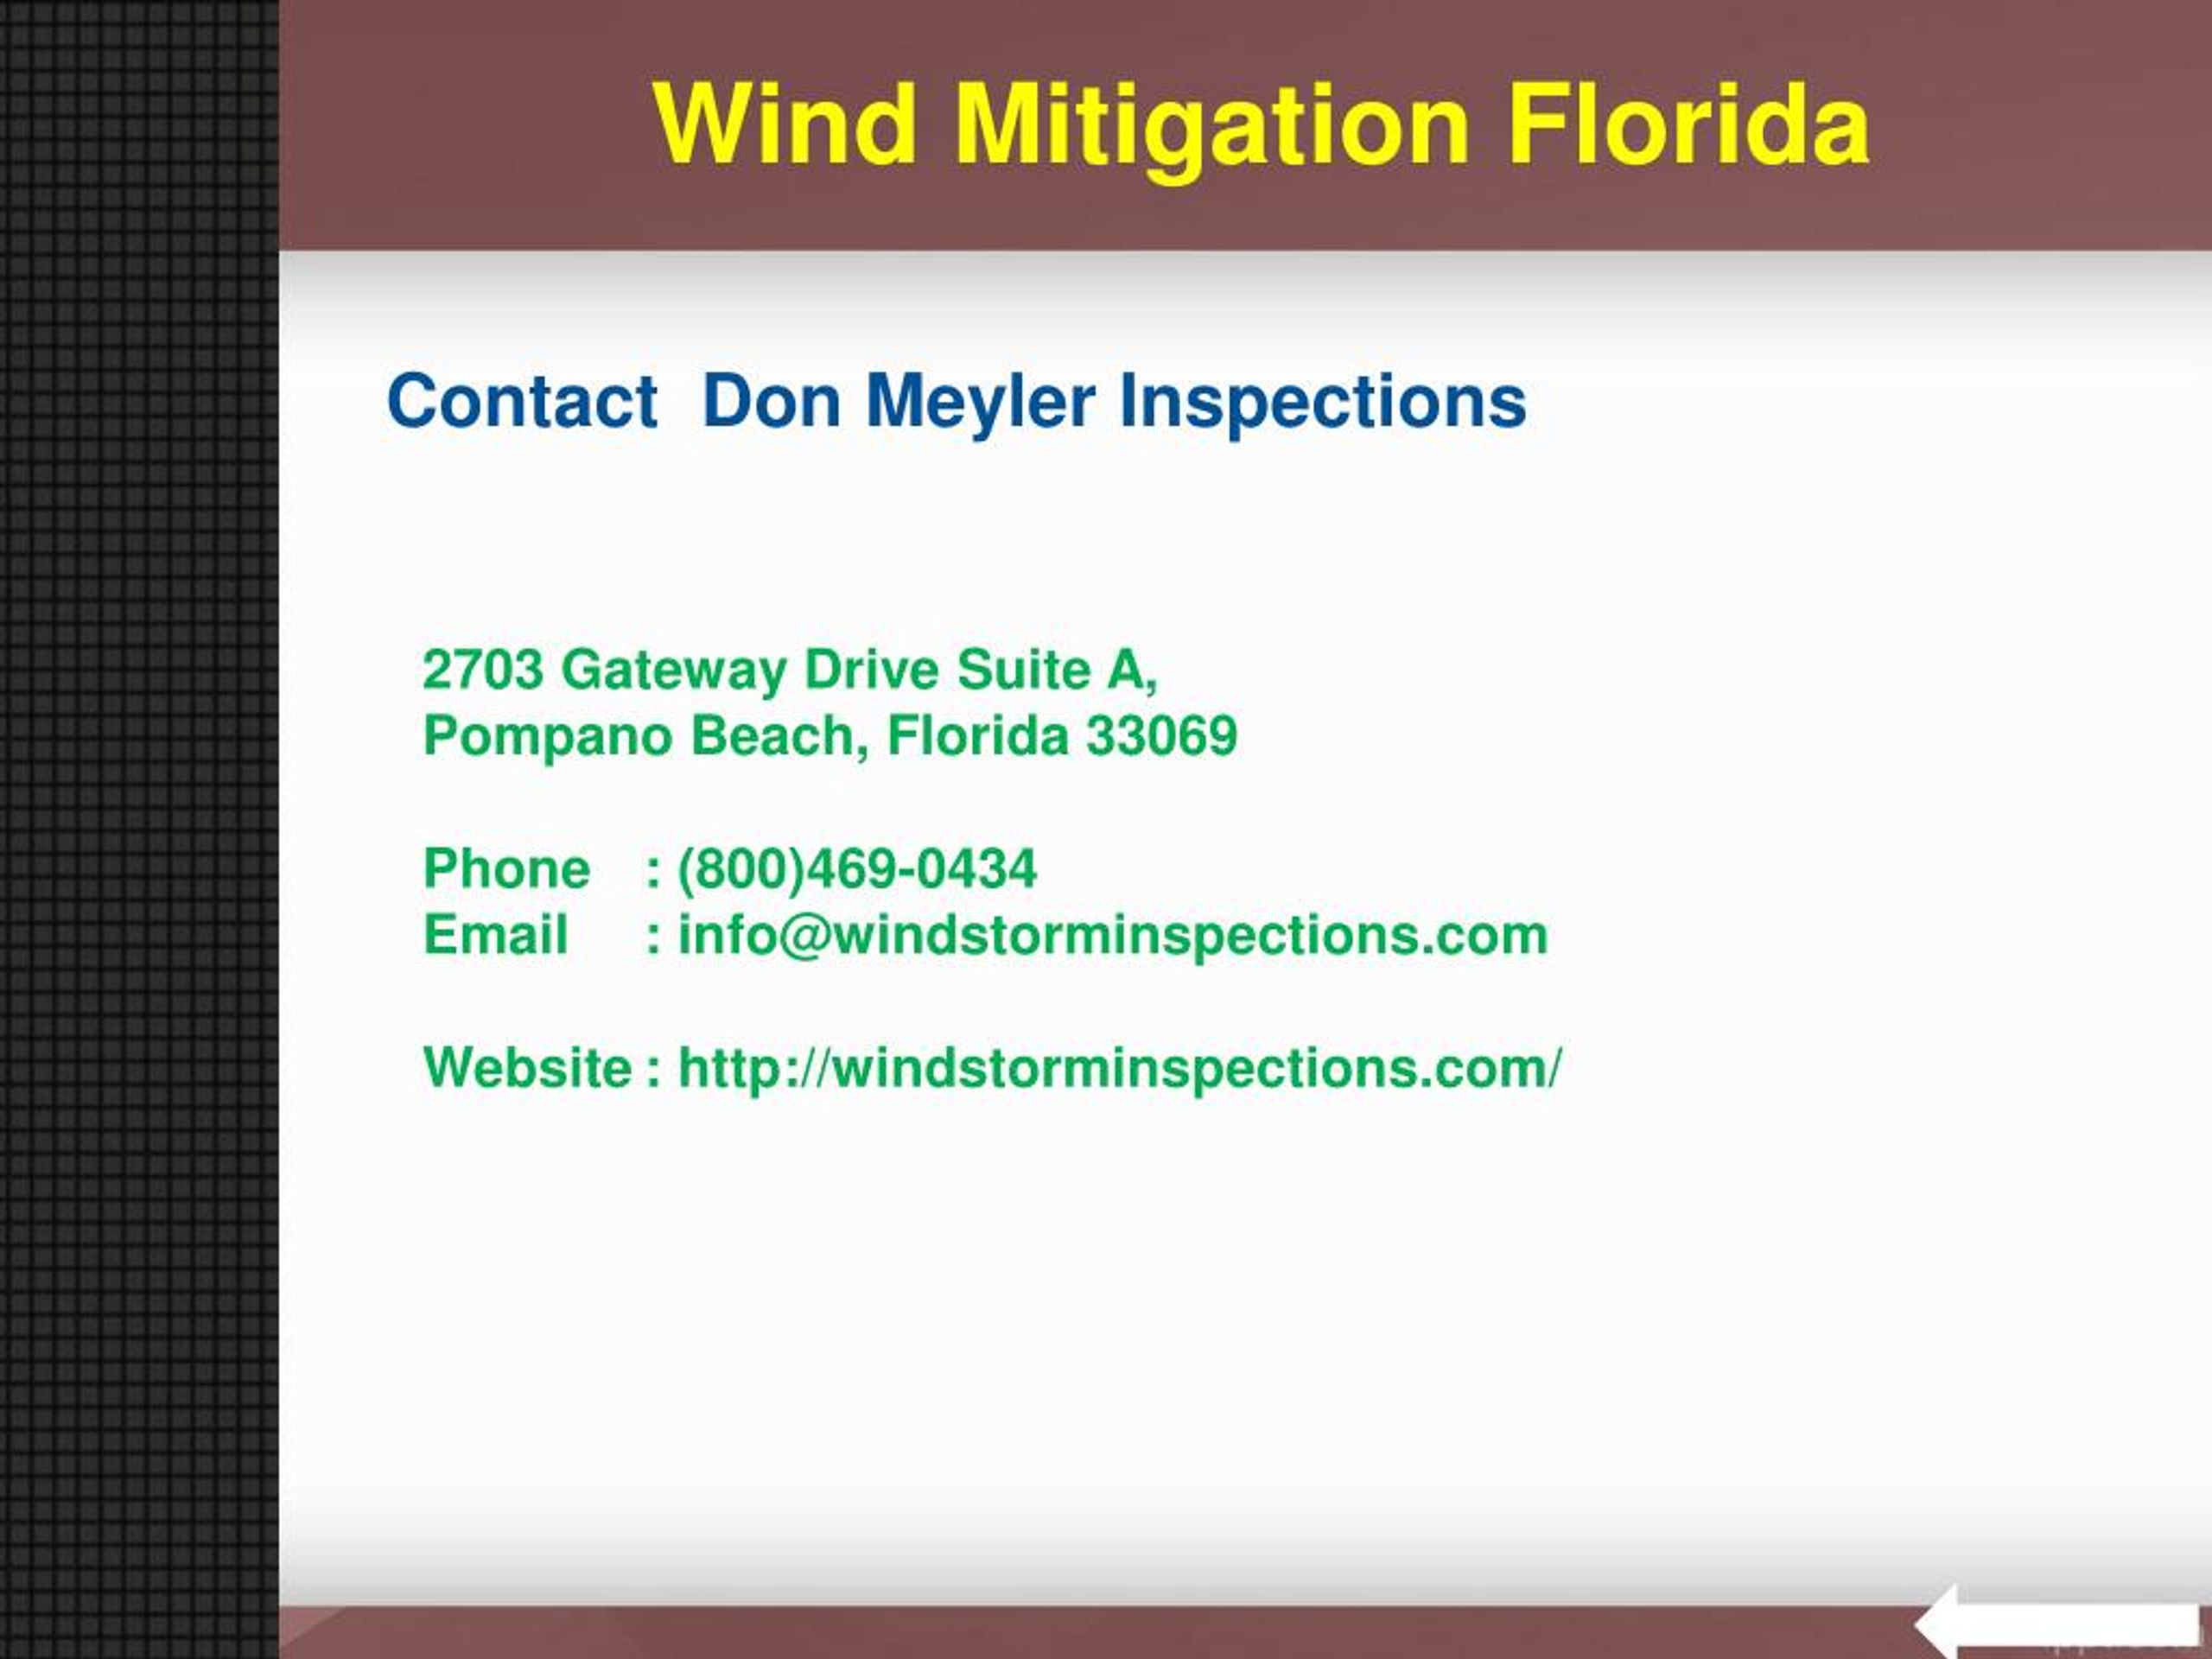 PPT Wind Mitigation Florida PowerPoint Presentation free download